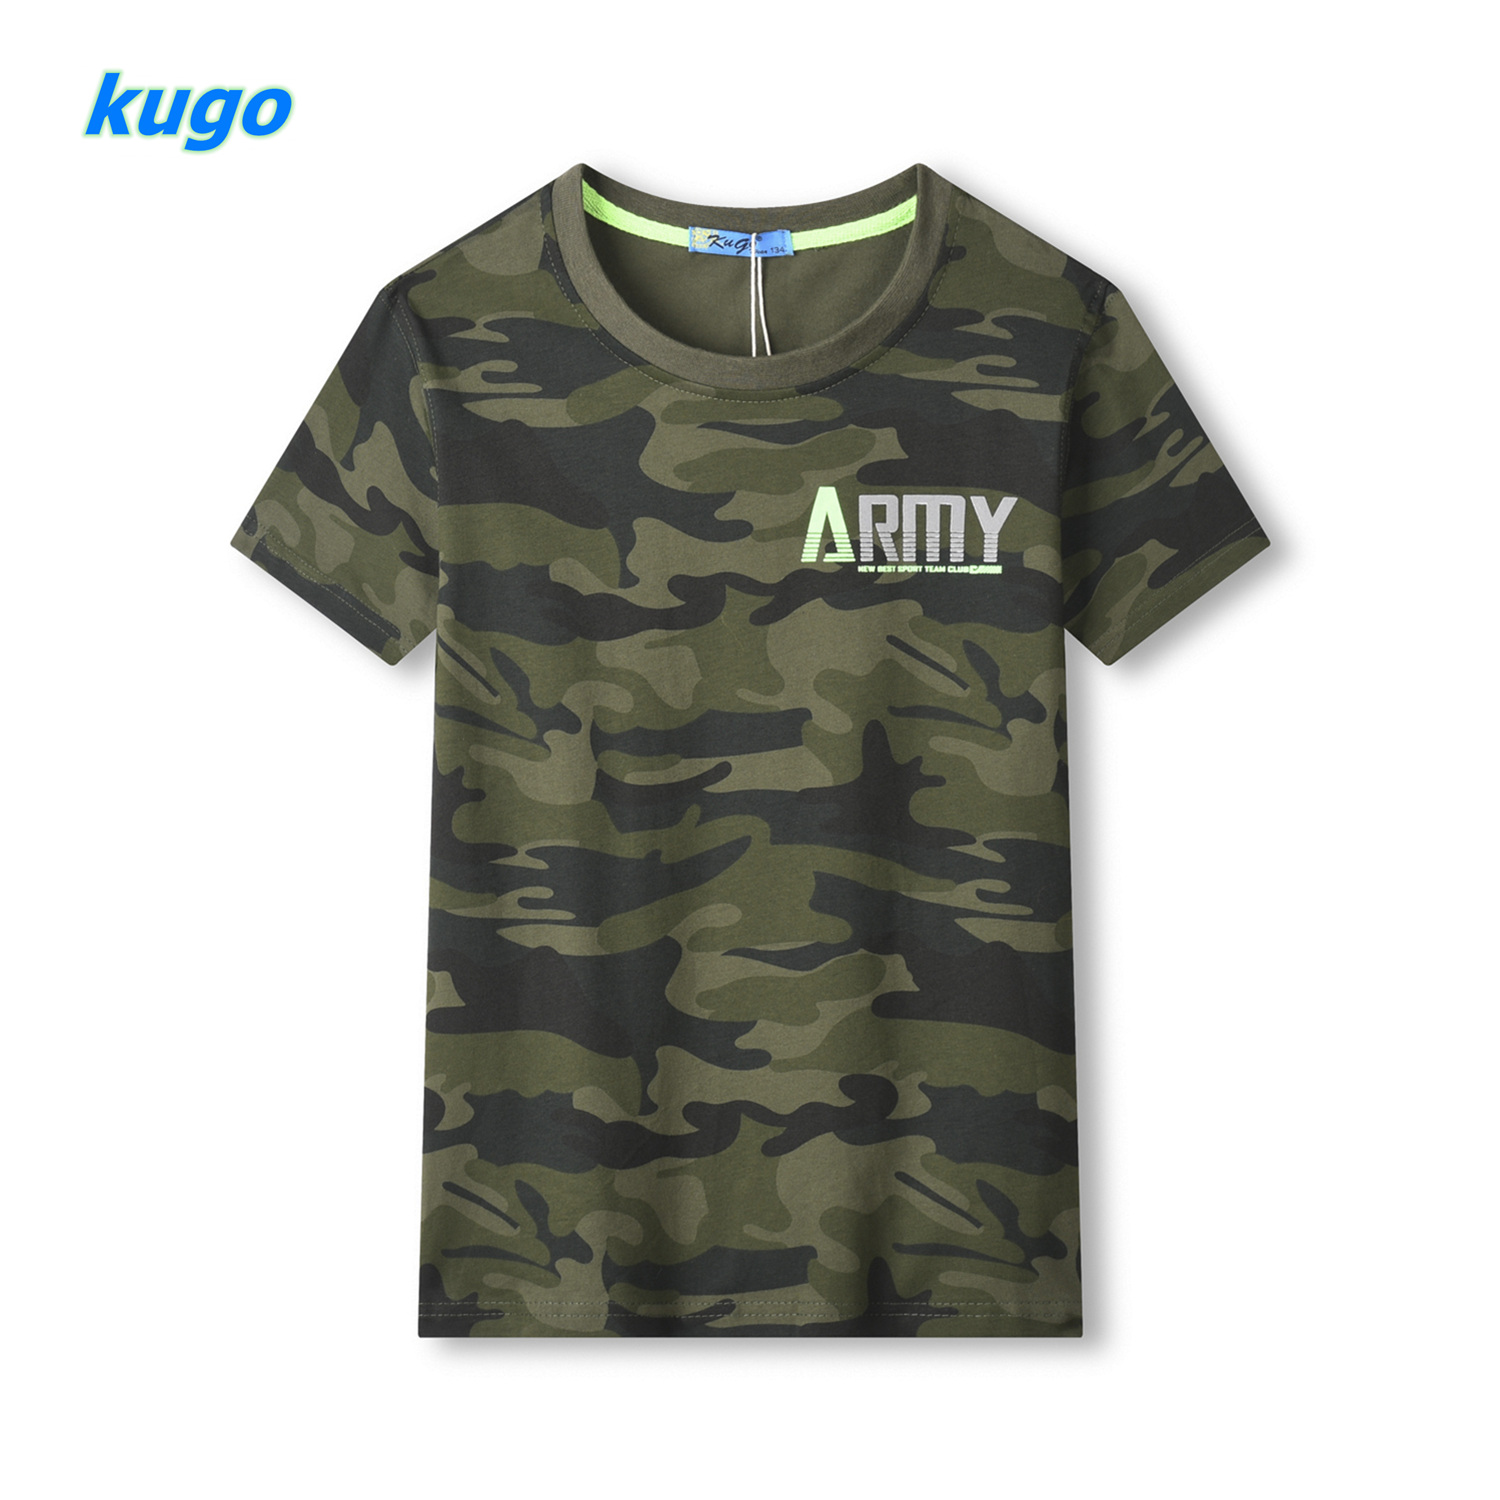 Chlapecké triko - KUGO TM9218, khaki/ tyrkysová aplikace Barva: Khaki, Velikost: 164